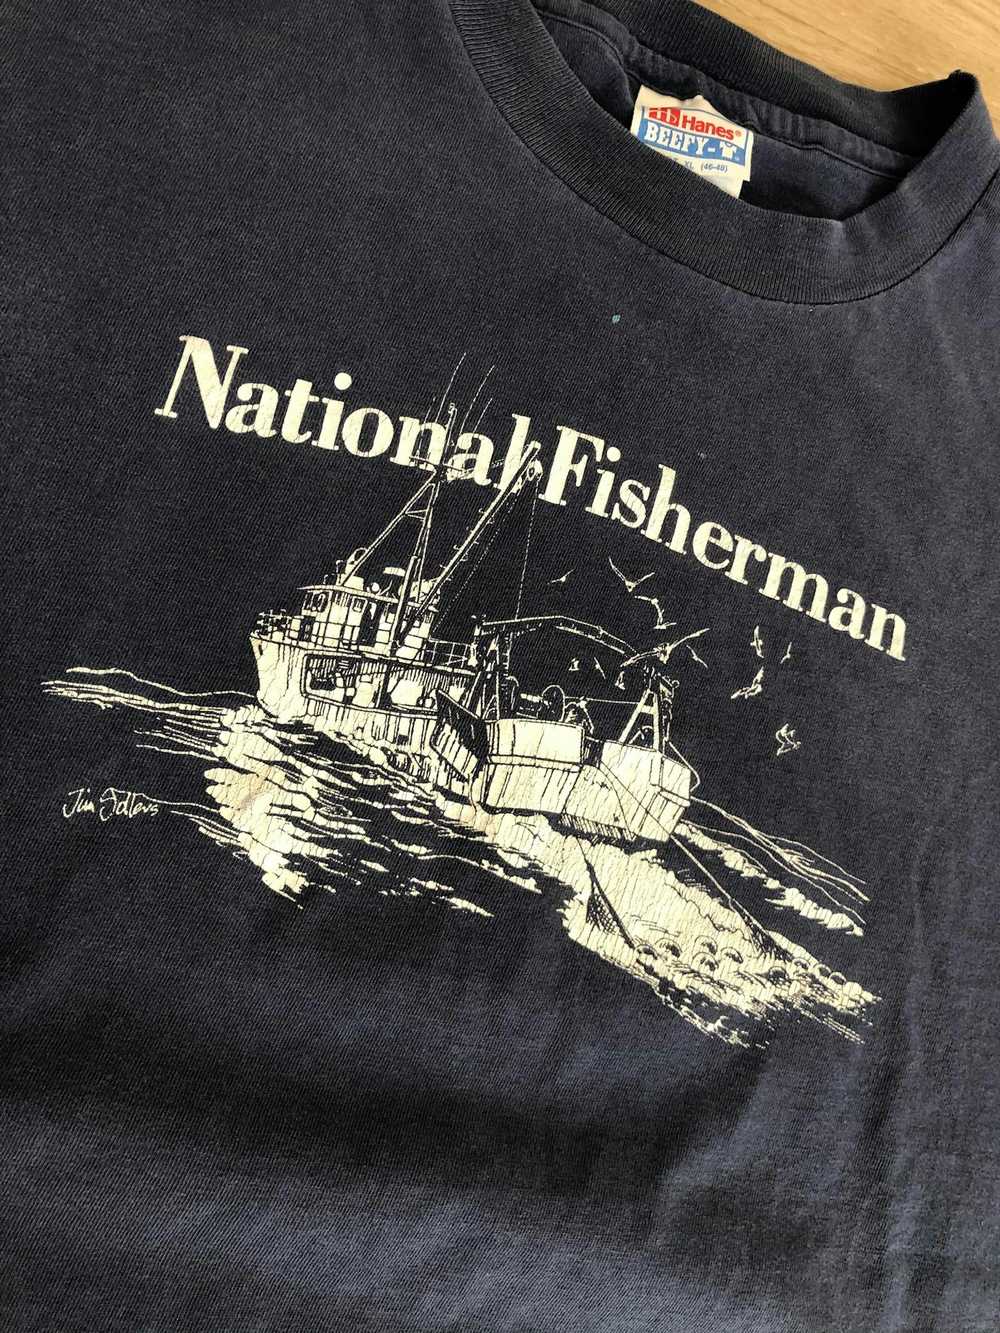 Hanes Vintage National Fisherman - image 2